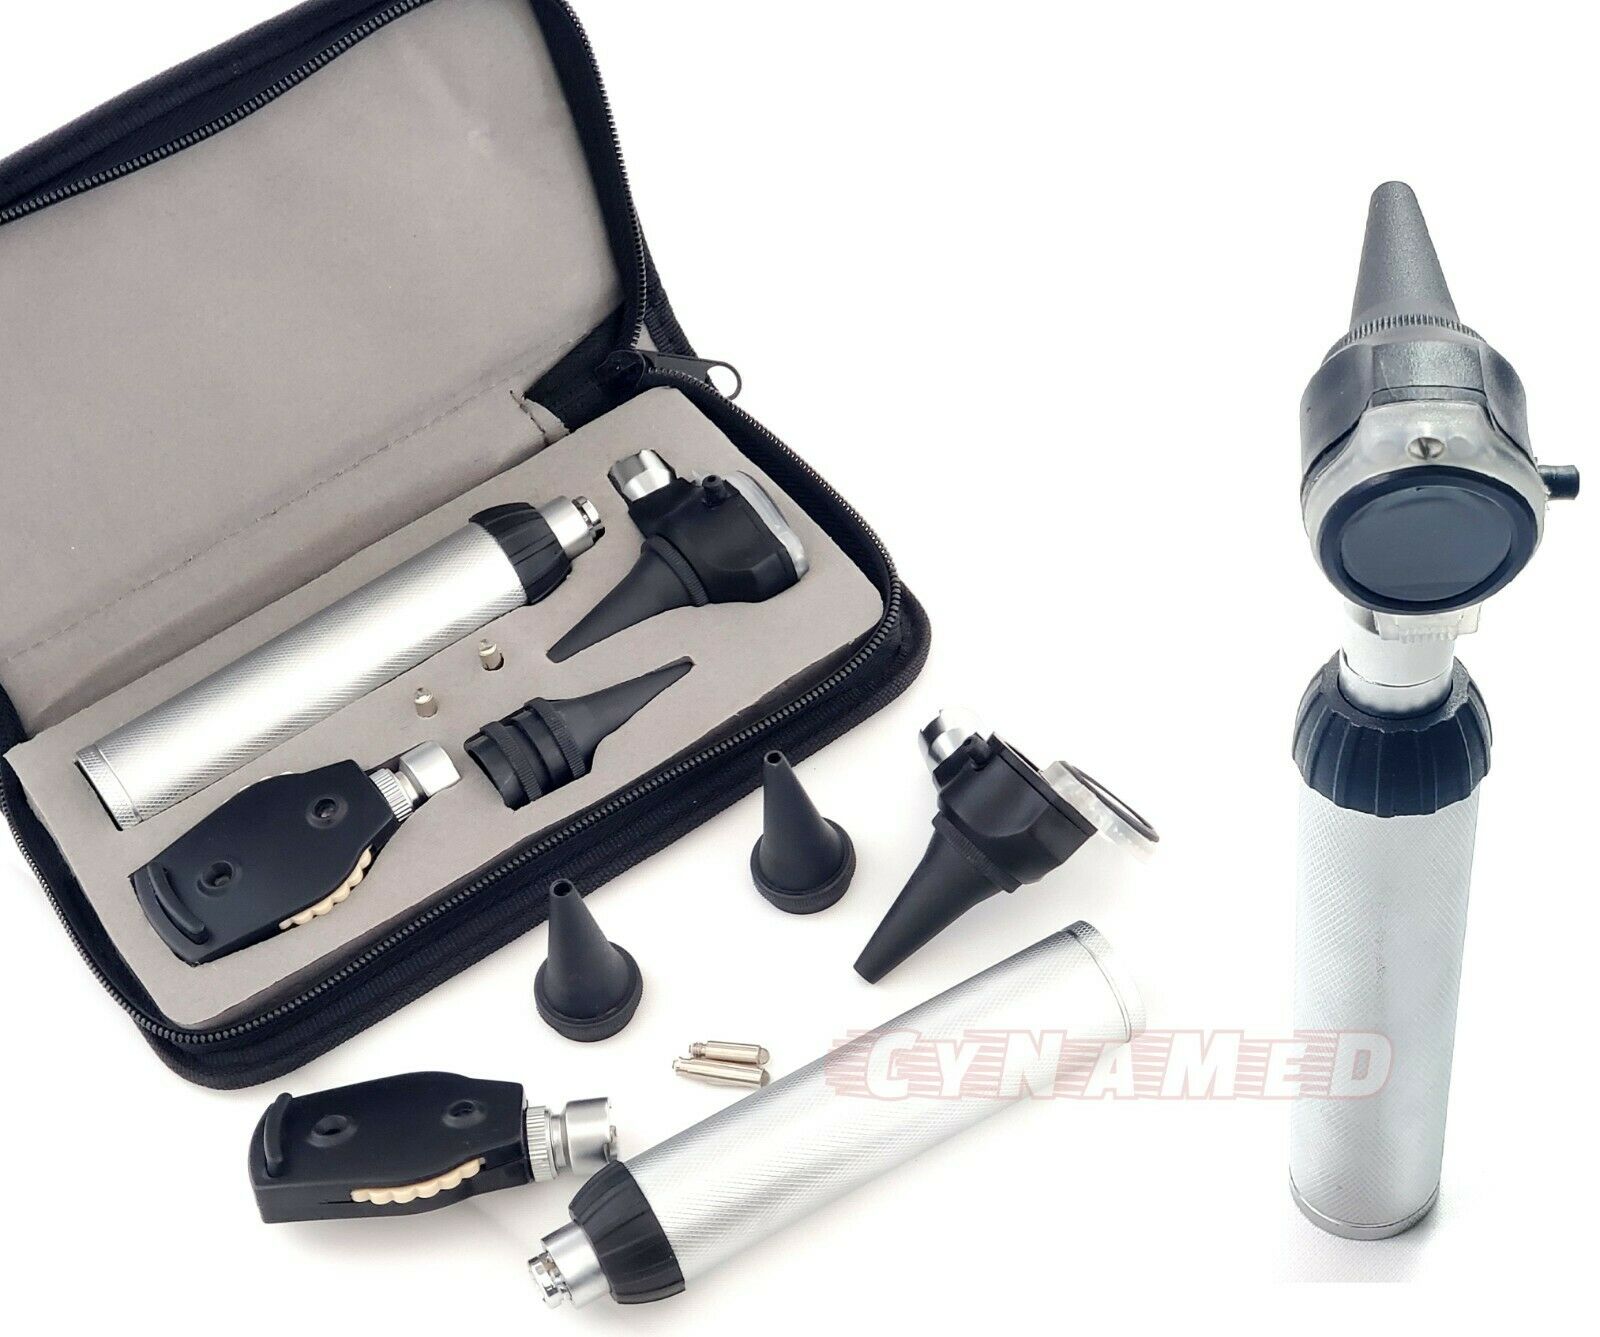 Incredible Premium Led Diagnostic Set Otoscope Ophthalmoscope 3.5v + 2 Free Bulb